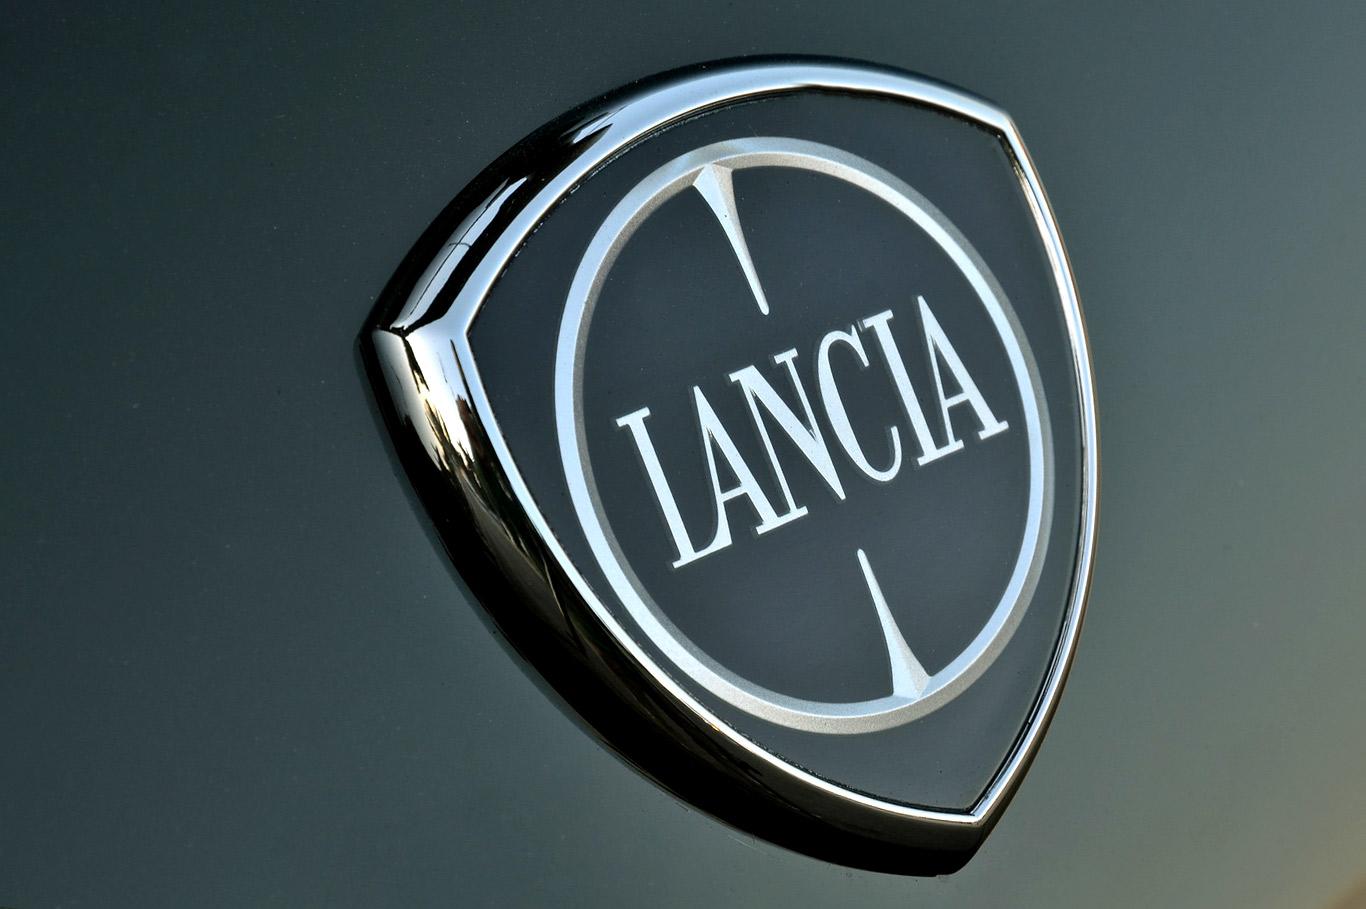 Lancia Technicalvs